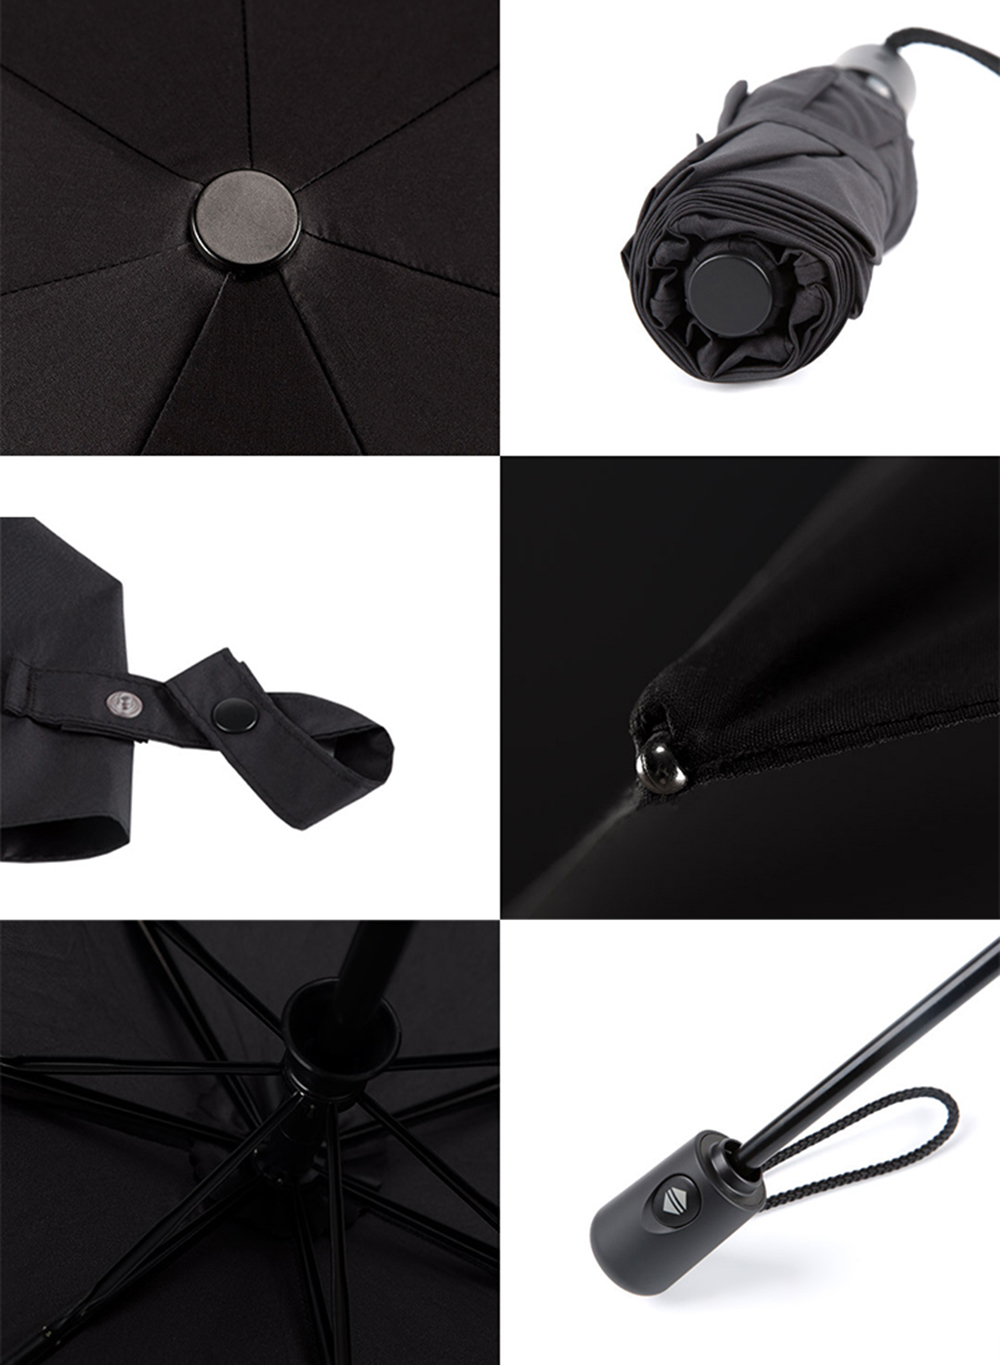 Xiaomi Sunlight-shading Heat-insulating Anti-UV Umbrella for Sunny and Rainy Days